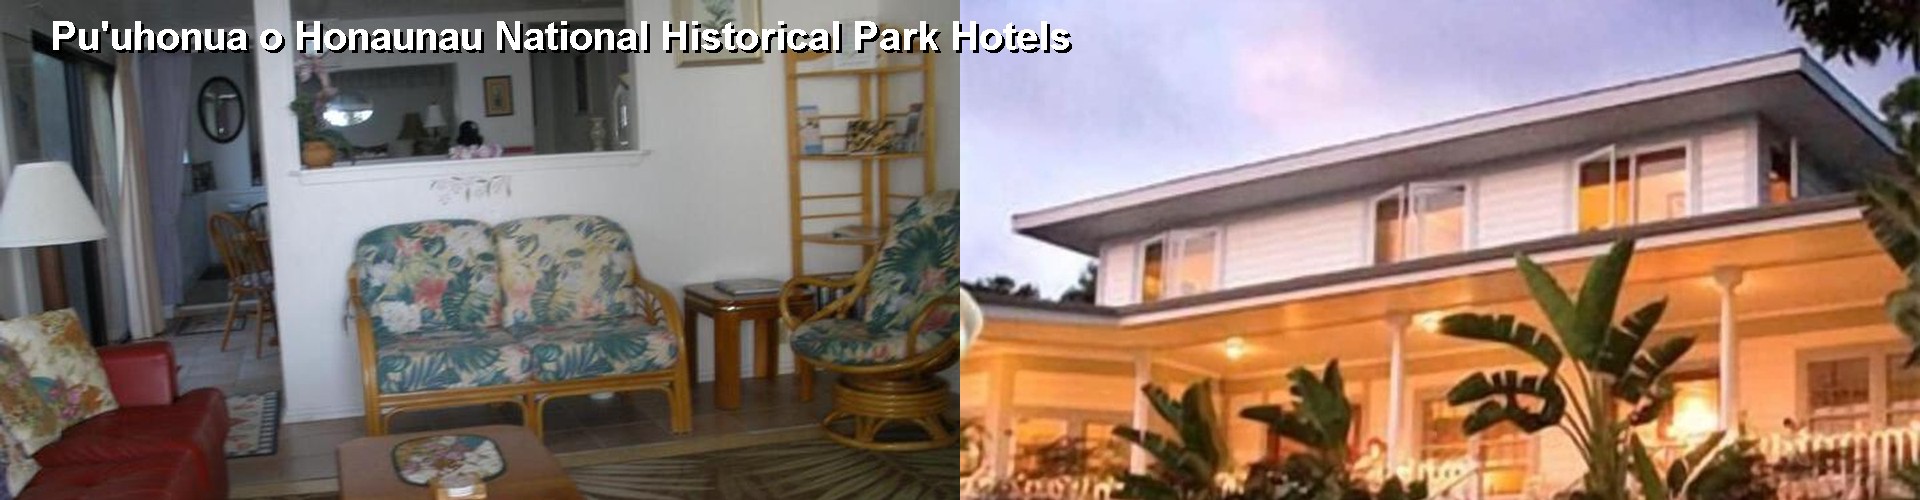 5 Best Hotels near Pu'uhonua o Honaunau National Historical Park